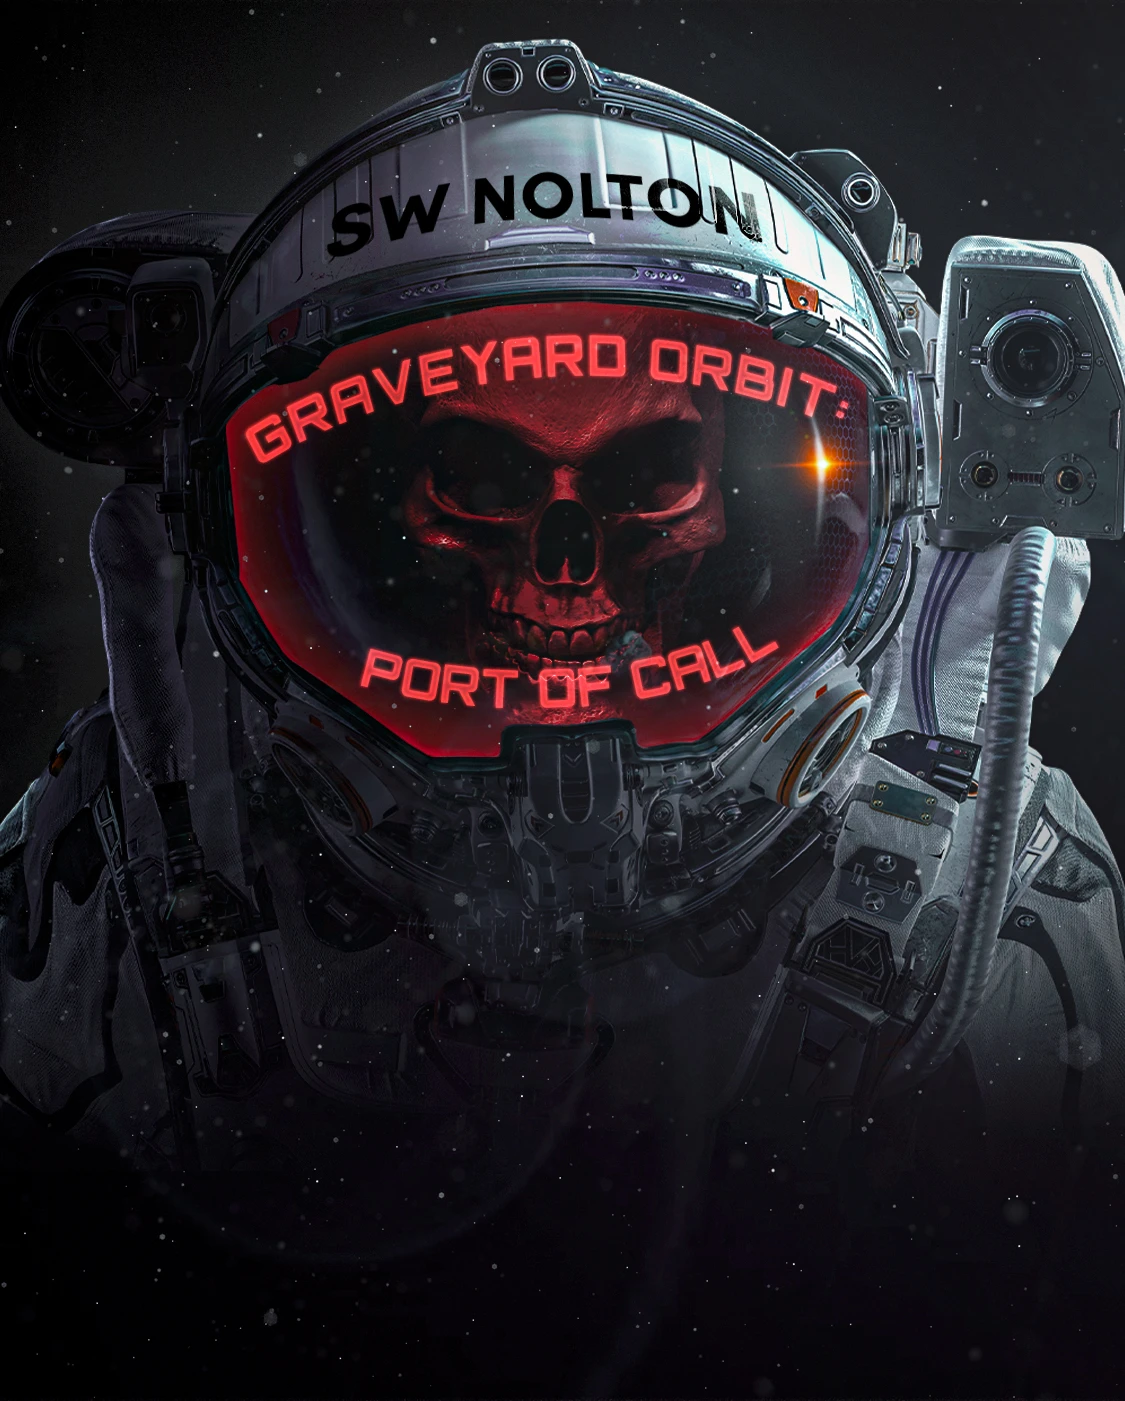 4006-graveyard-orbit-port-of-call-homepage-banner.jpg